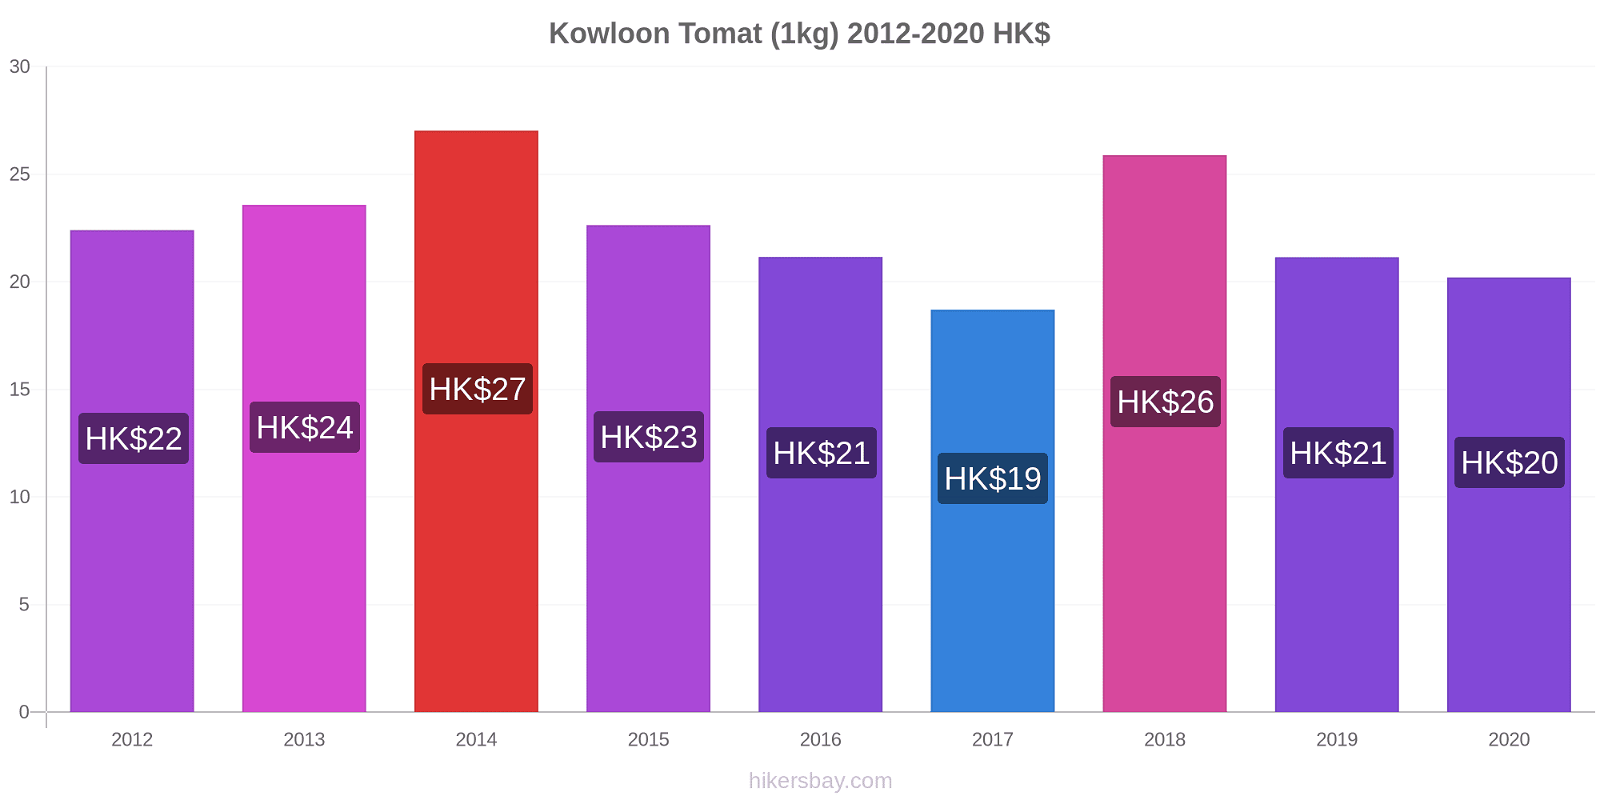 Kowloon prisendringer Tomat (1kg) hikersbay.com